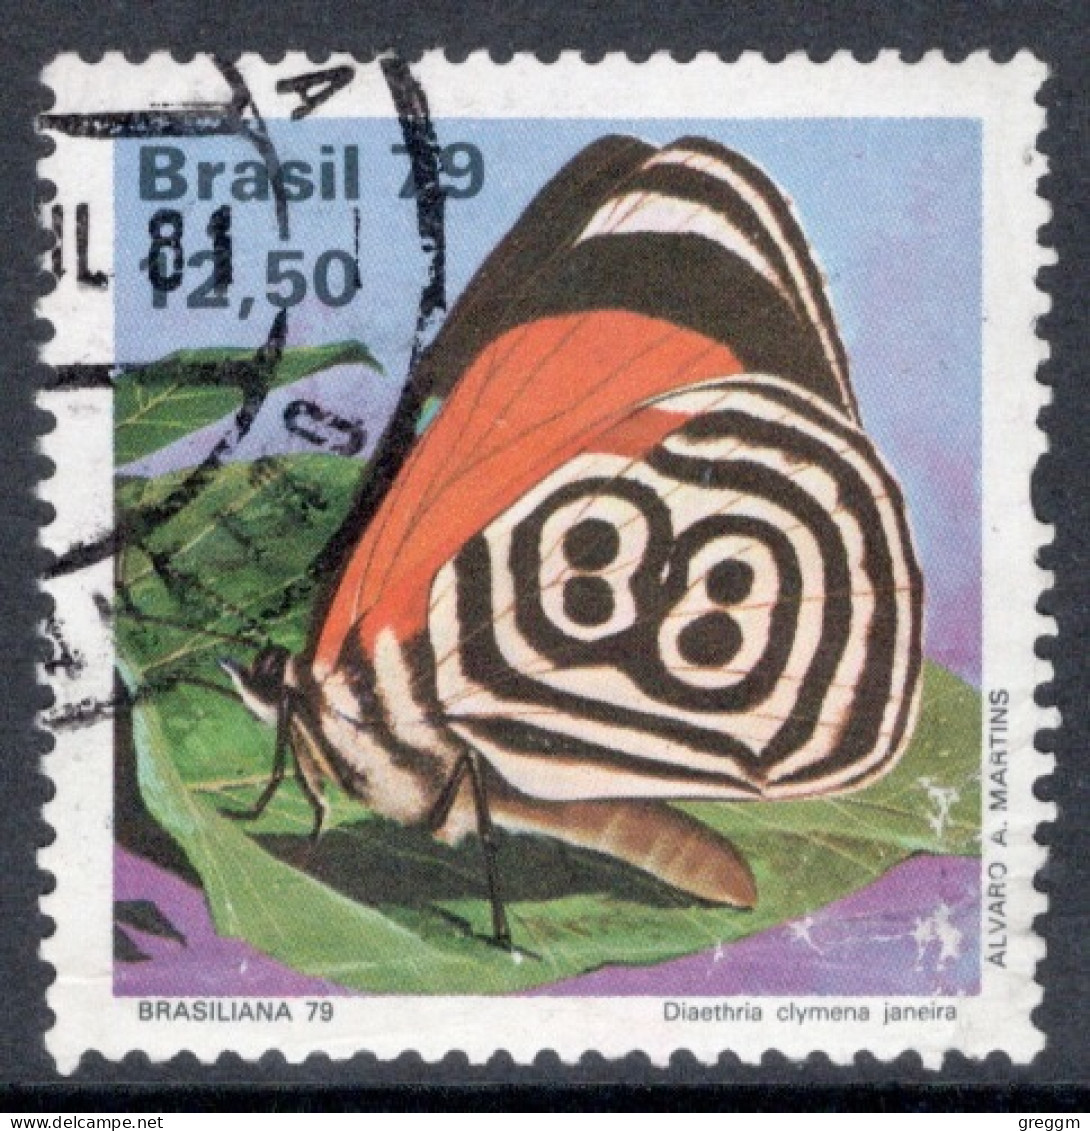 Brazil 1979 A Single Stamp International Stamp Exhibition "Brasiliana 79" - Butterflies In Fine Used - Oblitérés